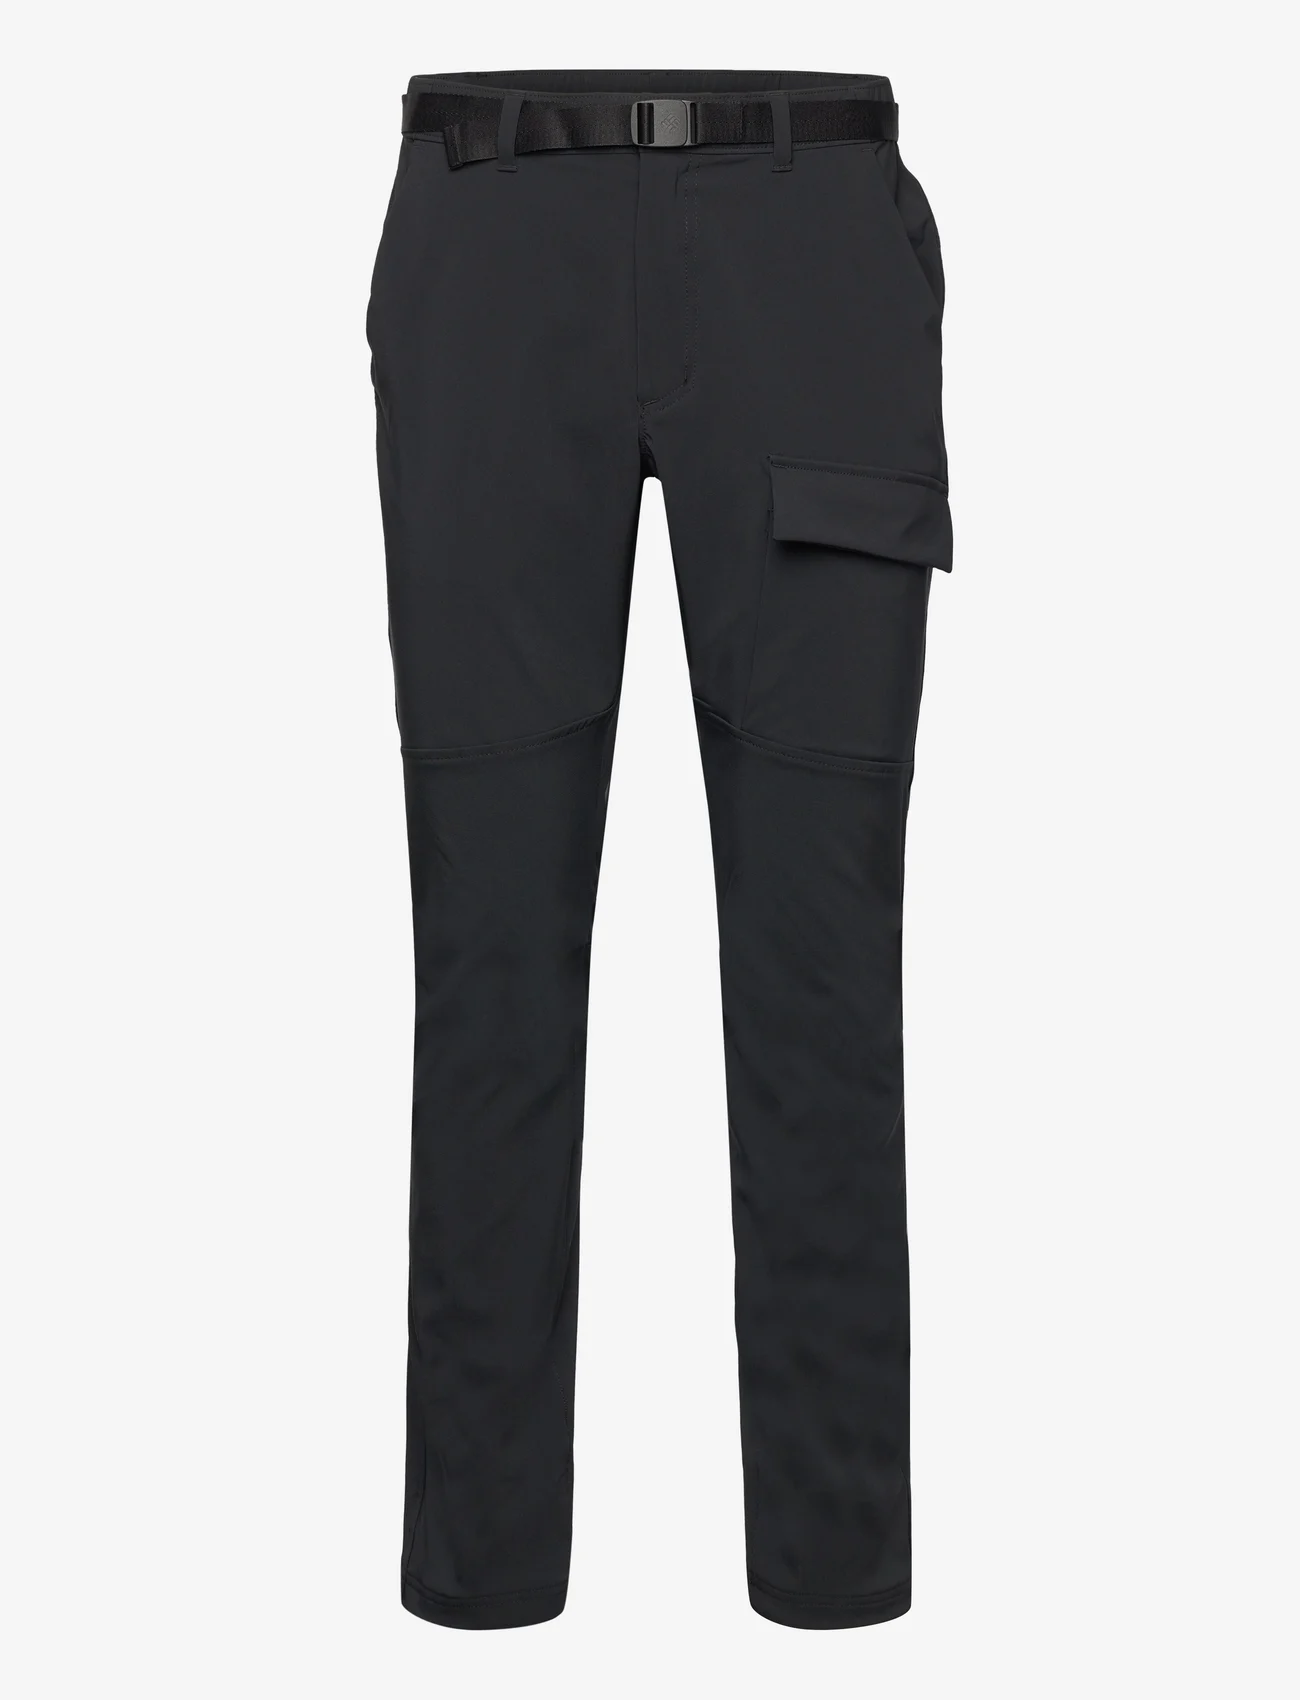 Columbia Sportswear - Maxtrail Midweight Warm Pant - outdoorhosen - black - 0